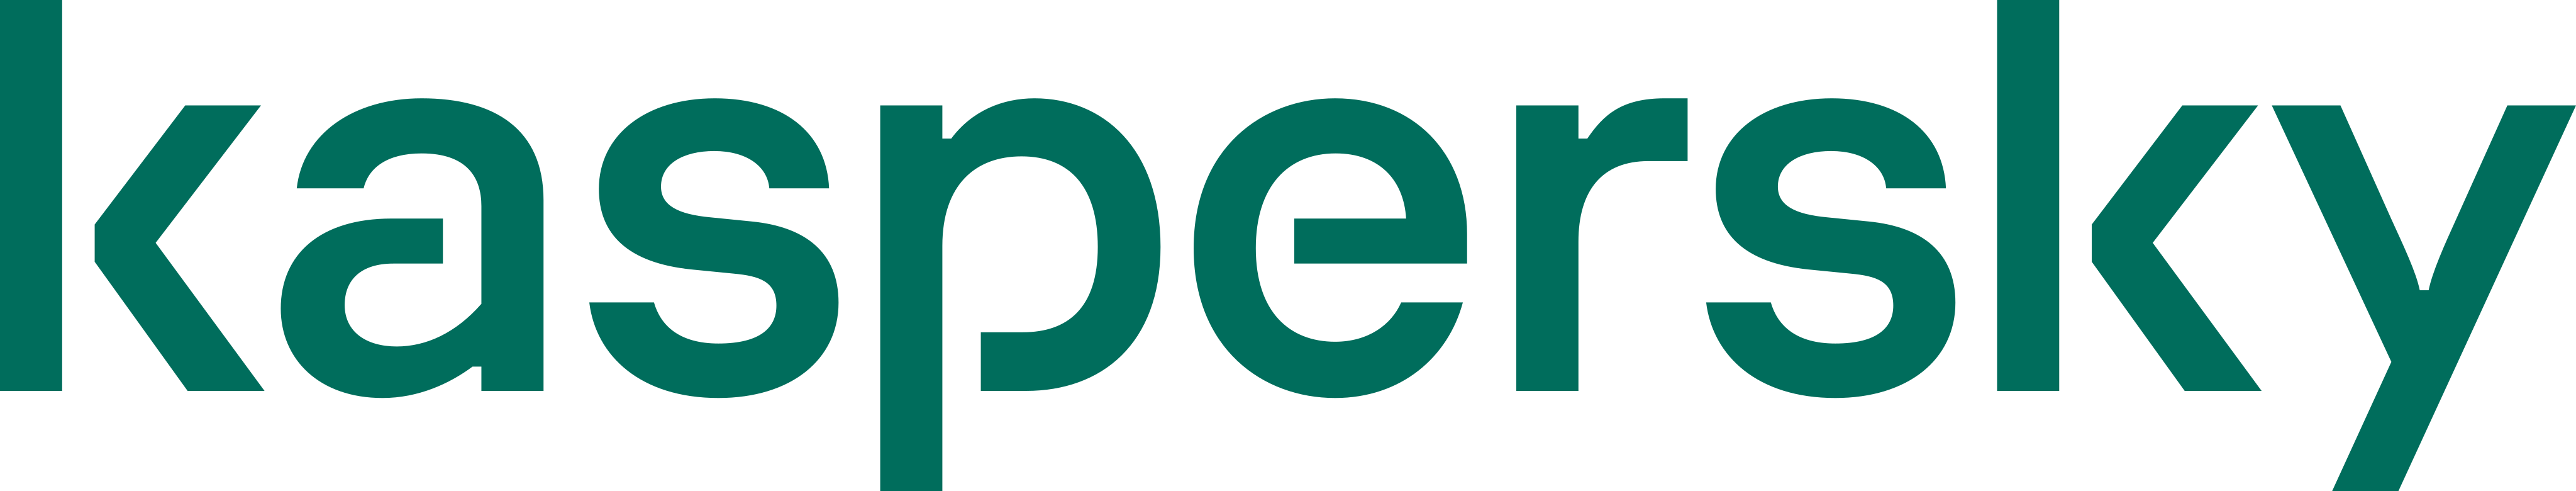 kaspersky-logo-8